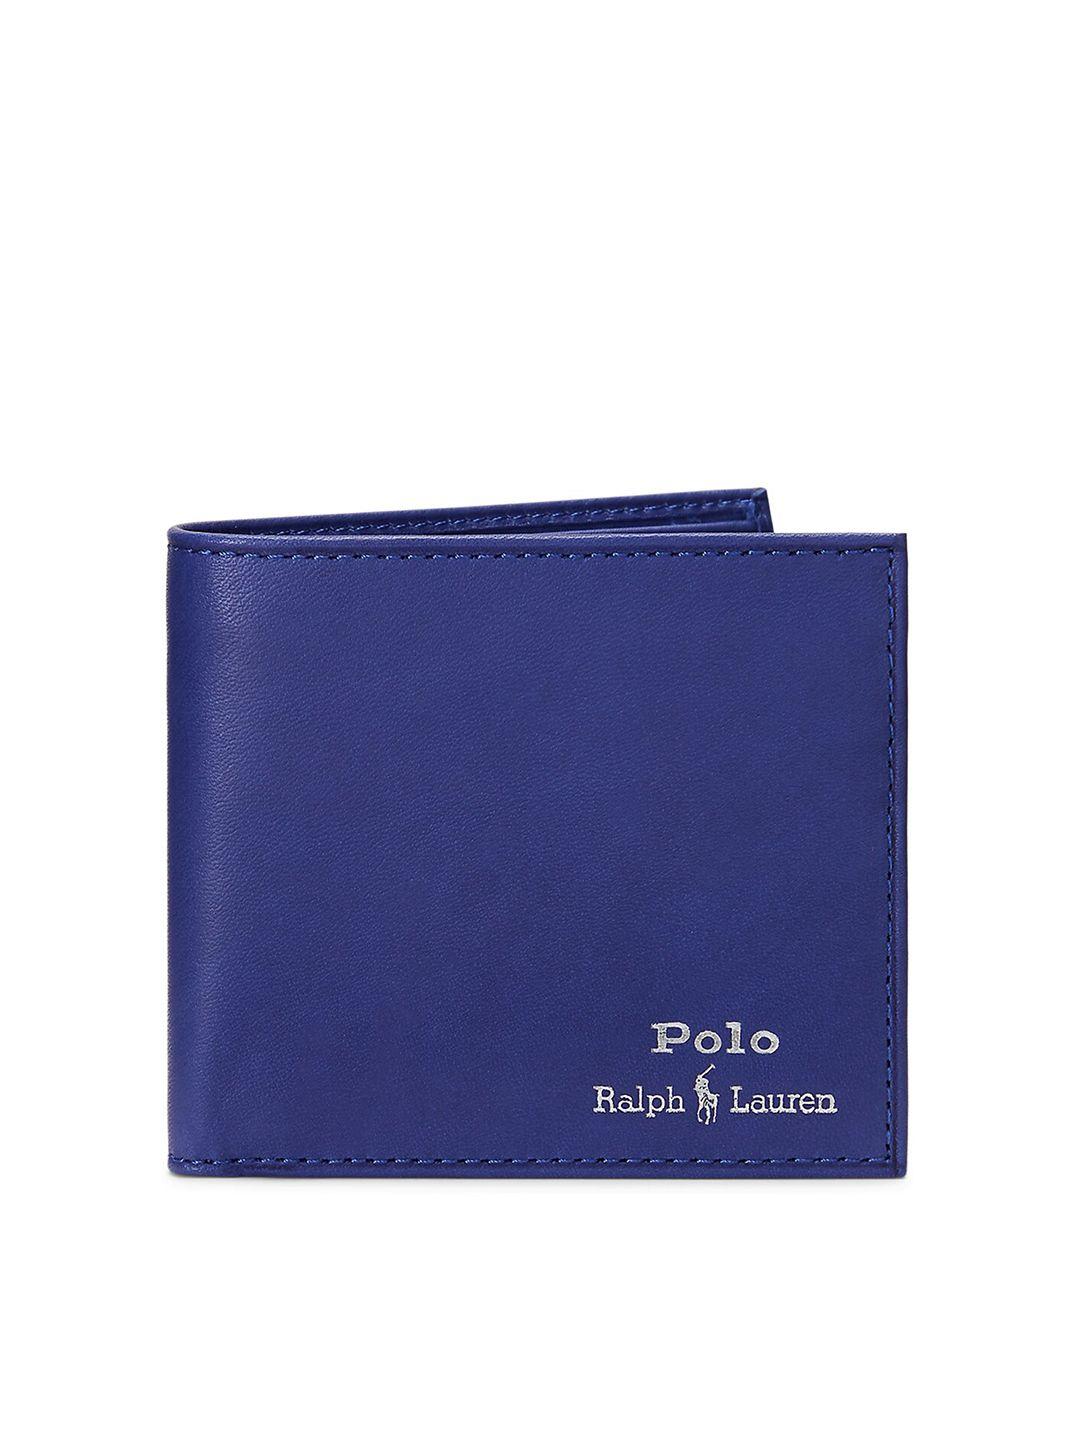 polo-ralph-lauren-men-brand-logo-printed-leather-billfold-wallet